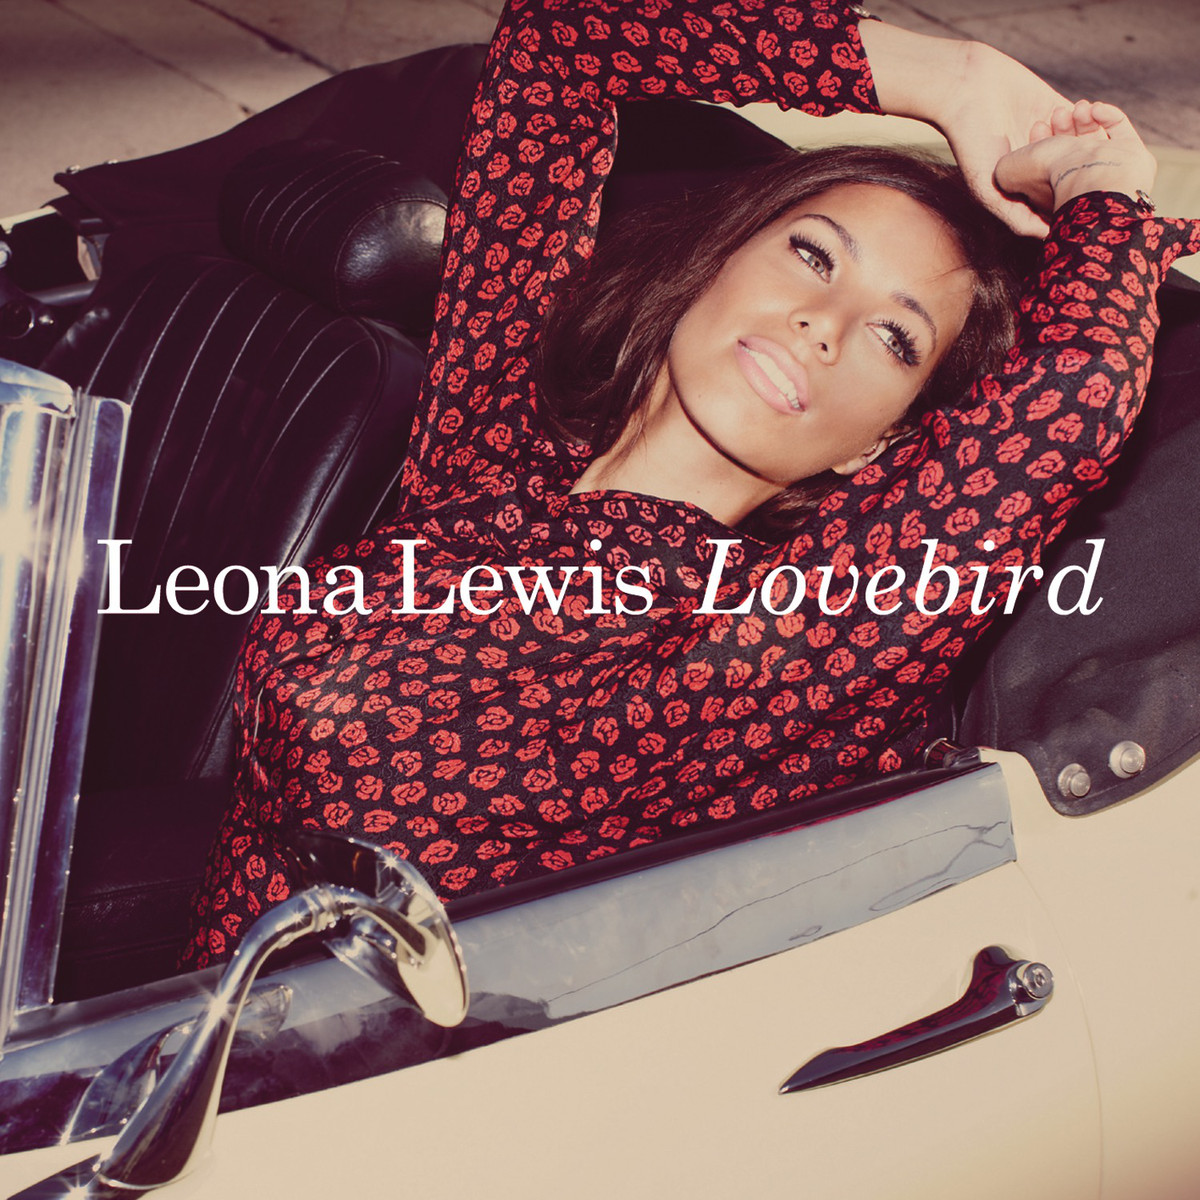 http://4.bp.blogspot.com/-N6K1h0YtH0s/USztDuatO8I/AAAAAAAAAQo/iuc7MHkS8Kg/s1600/Leona+Lewis+-+Lovebird.png